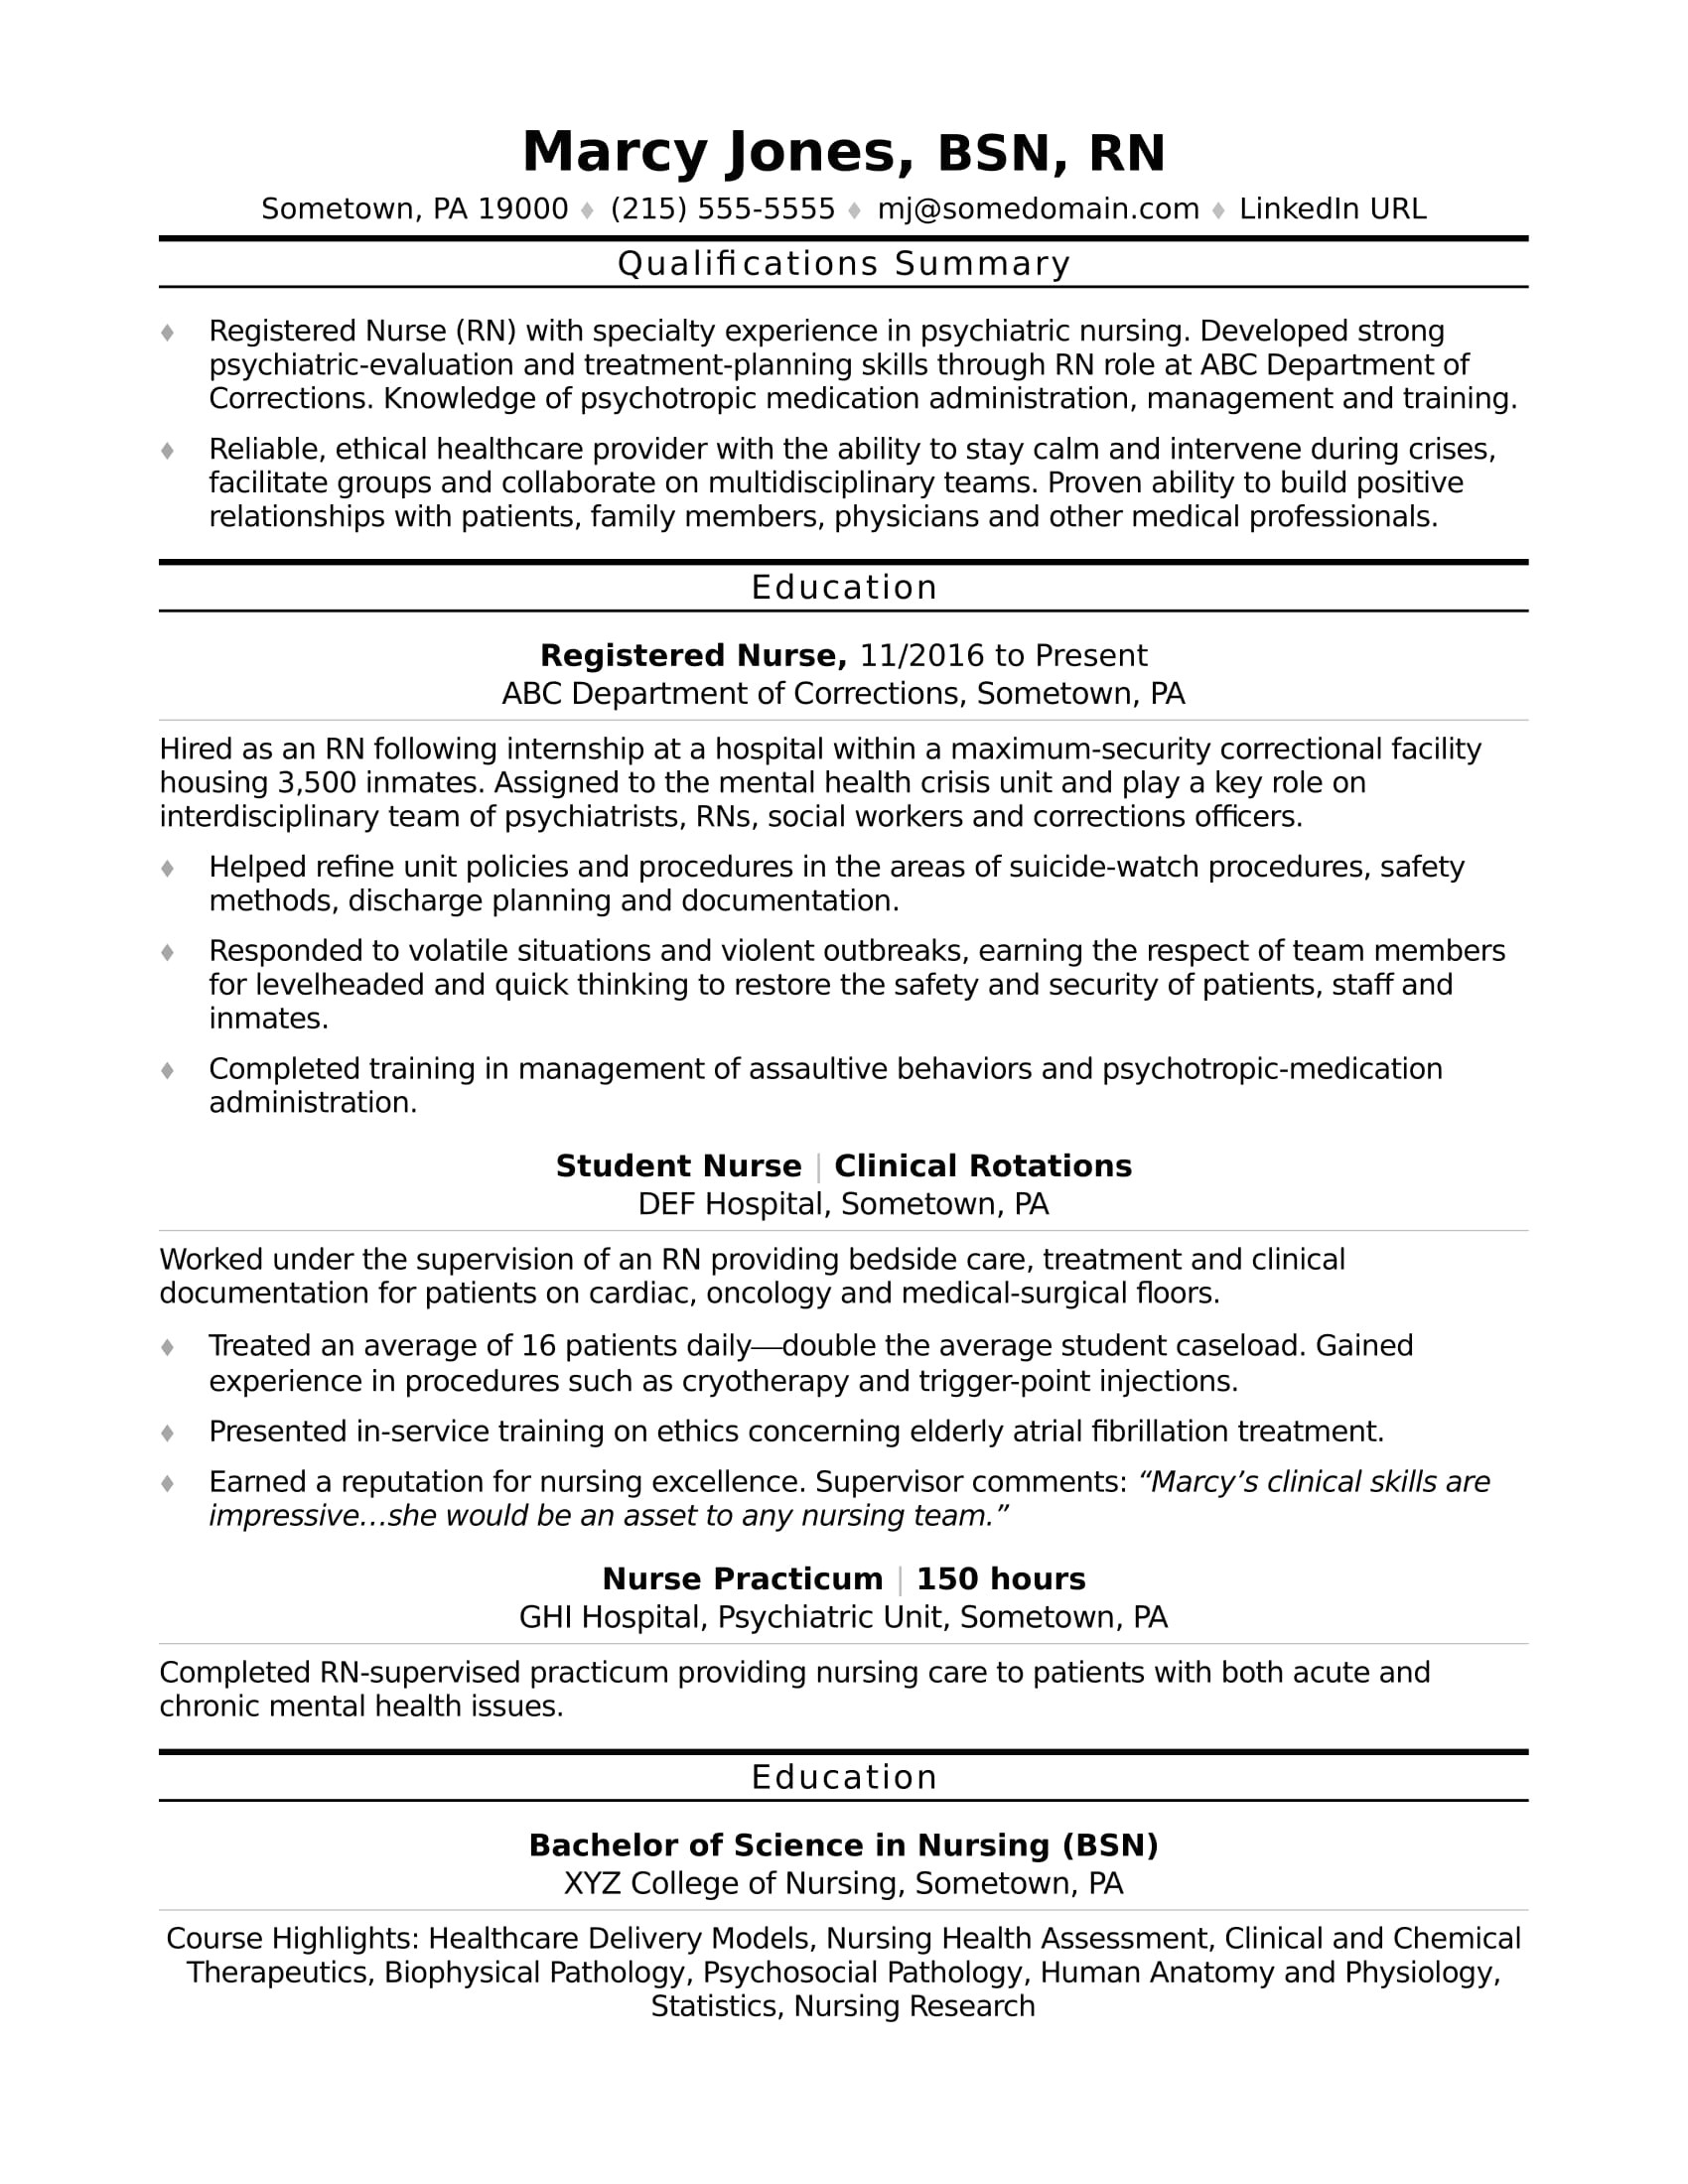 Sample Resume for Company Nurse Registered Nurse Rn Resume Sample Monster Com